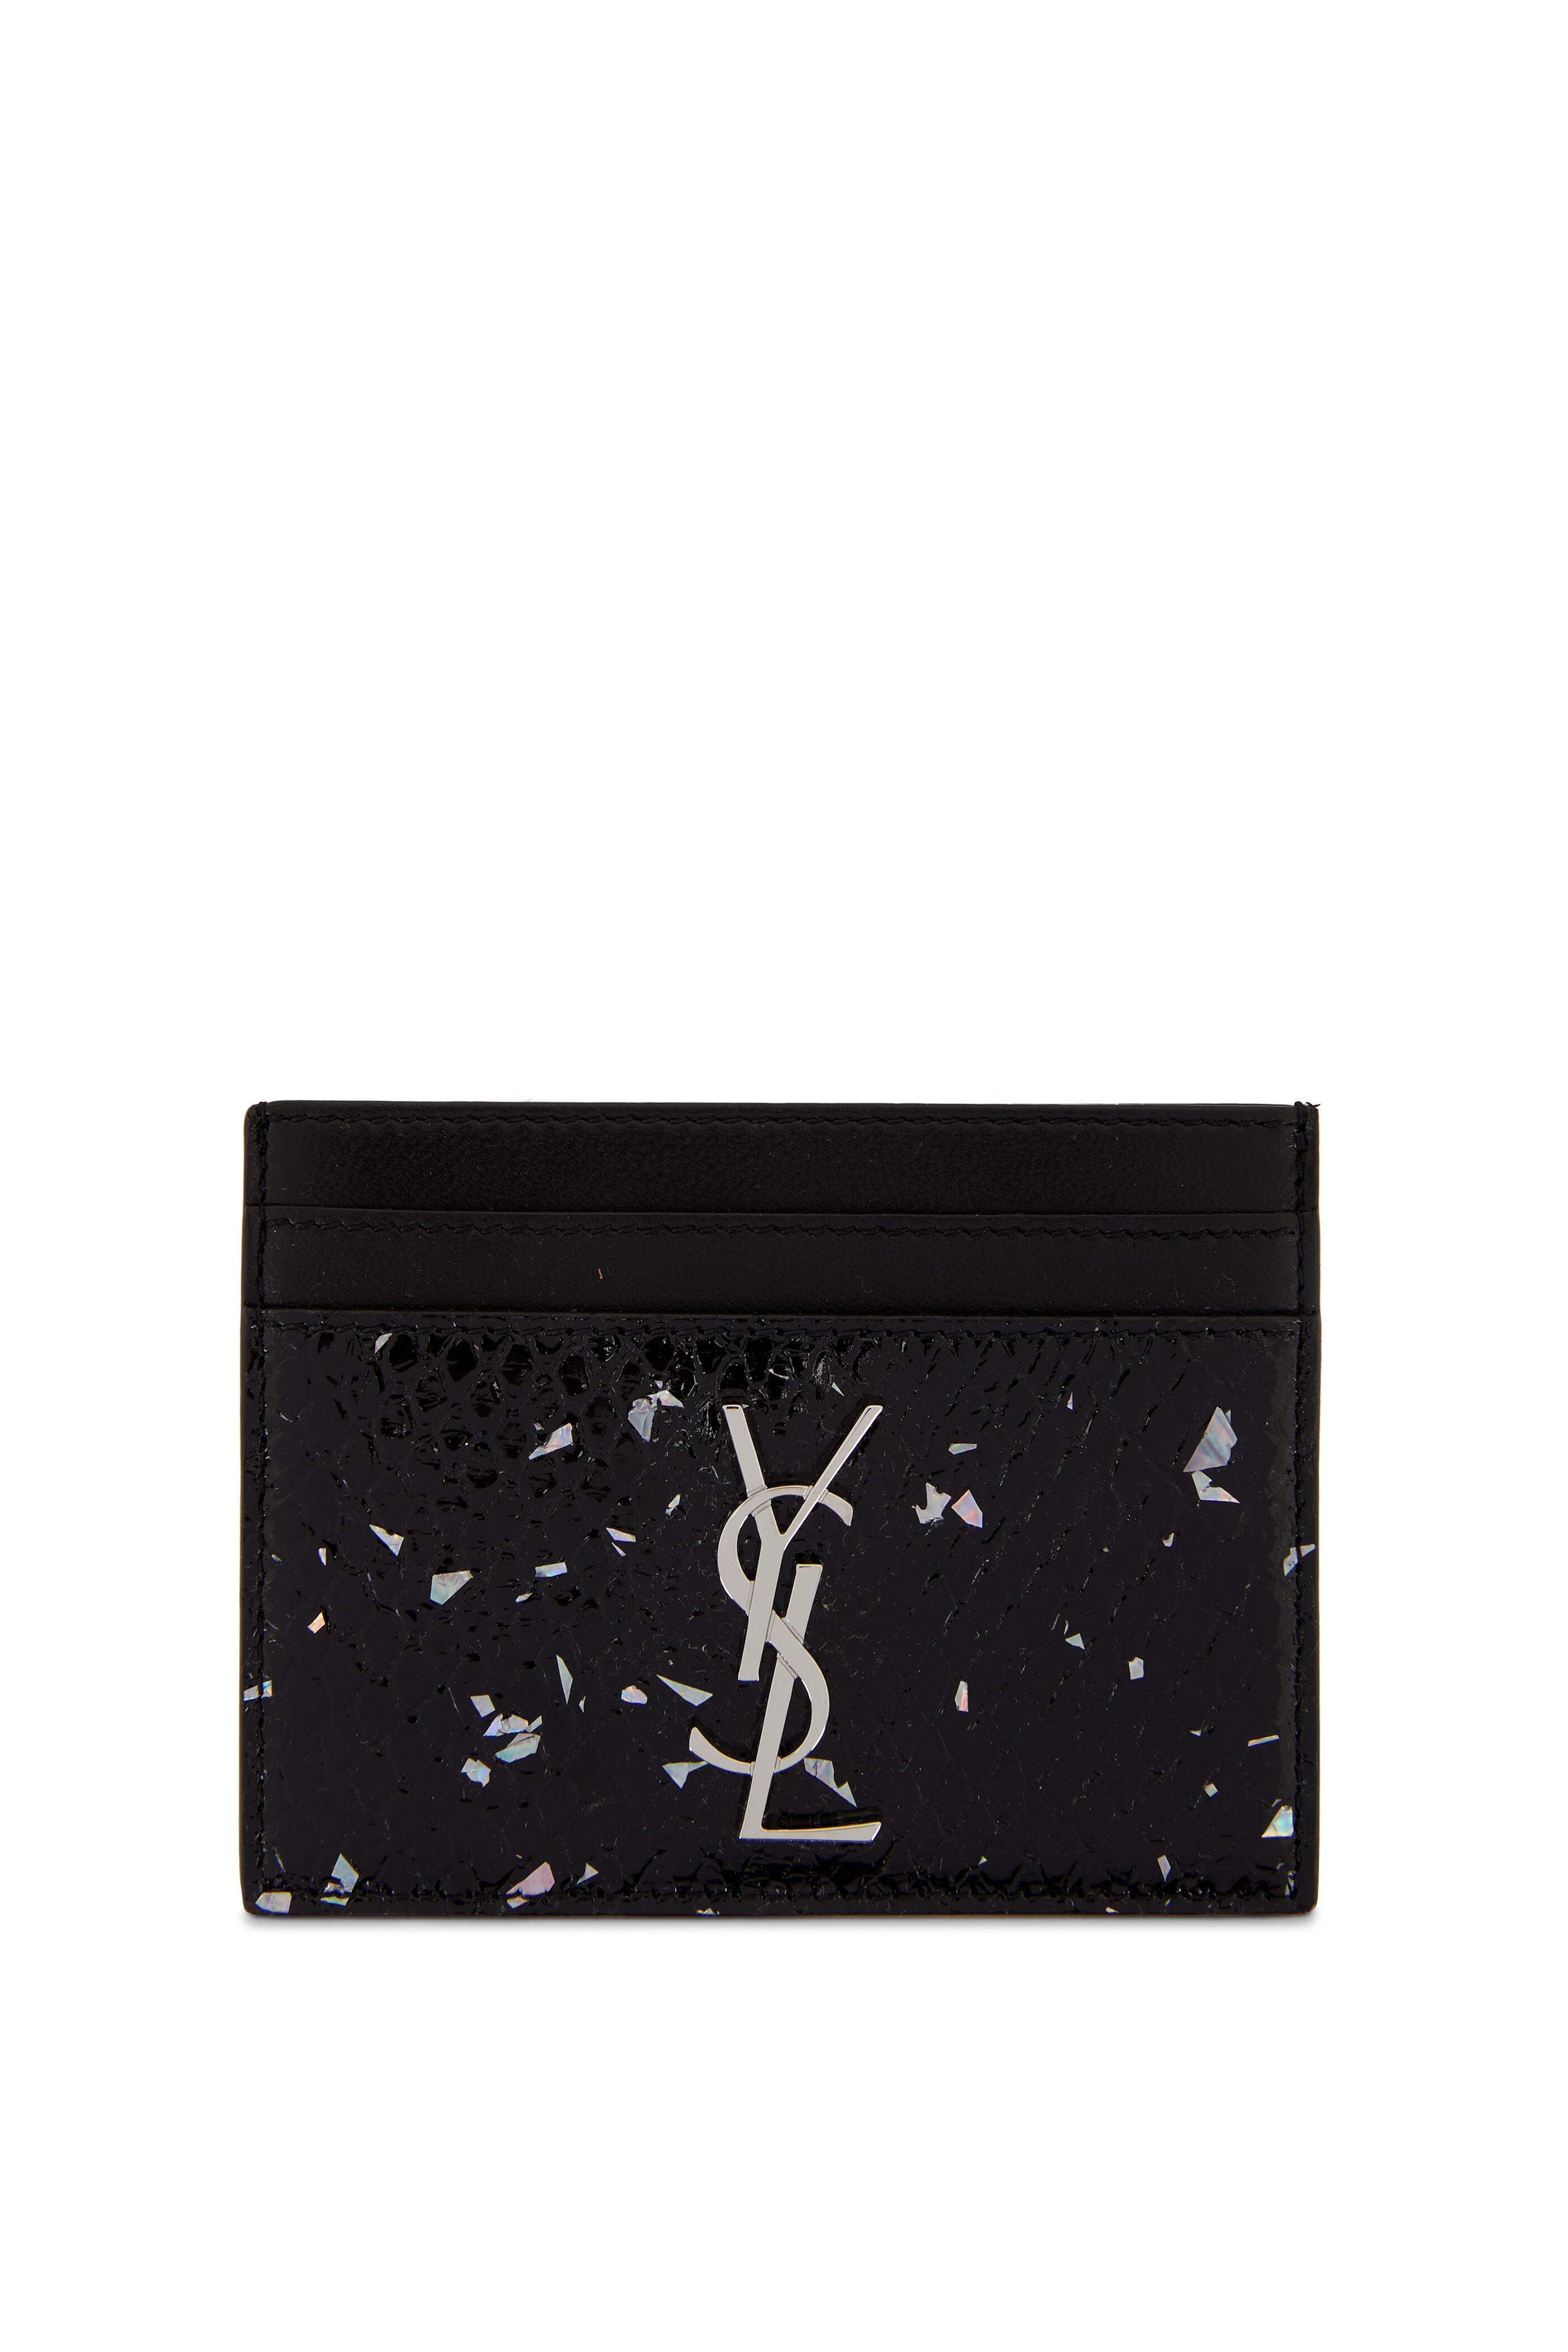 Saint Laurent - Black & Glitter Embossed Leather Card Holder